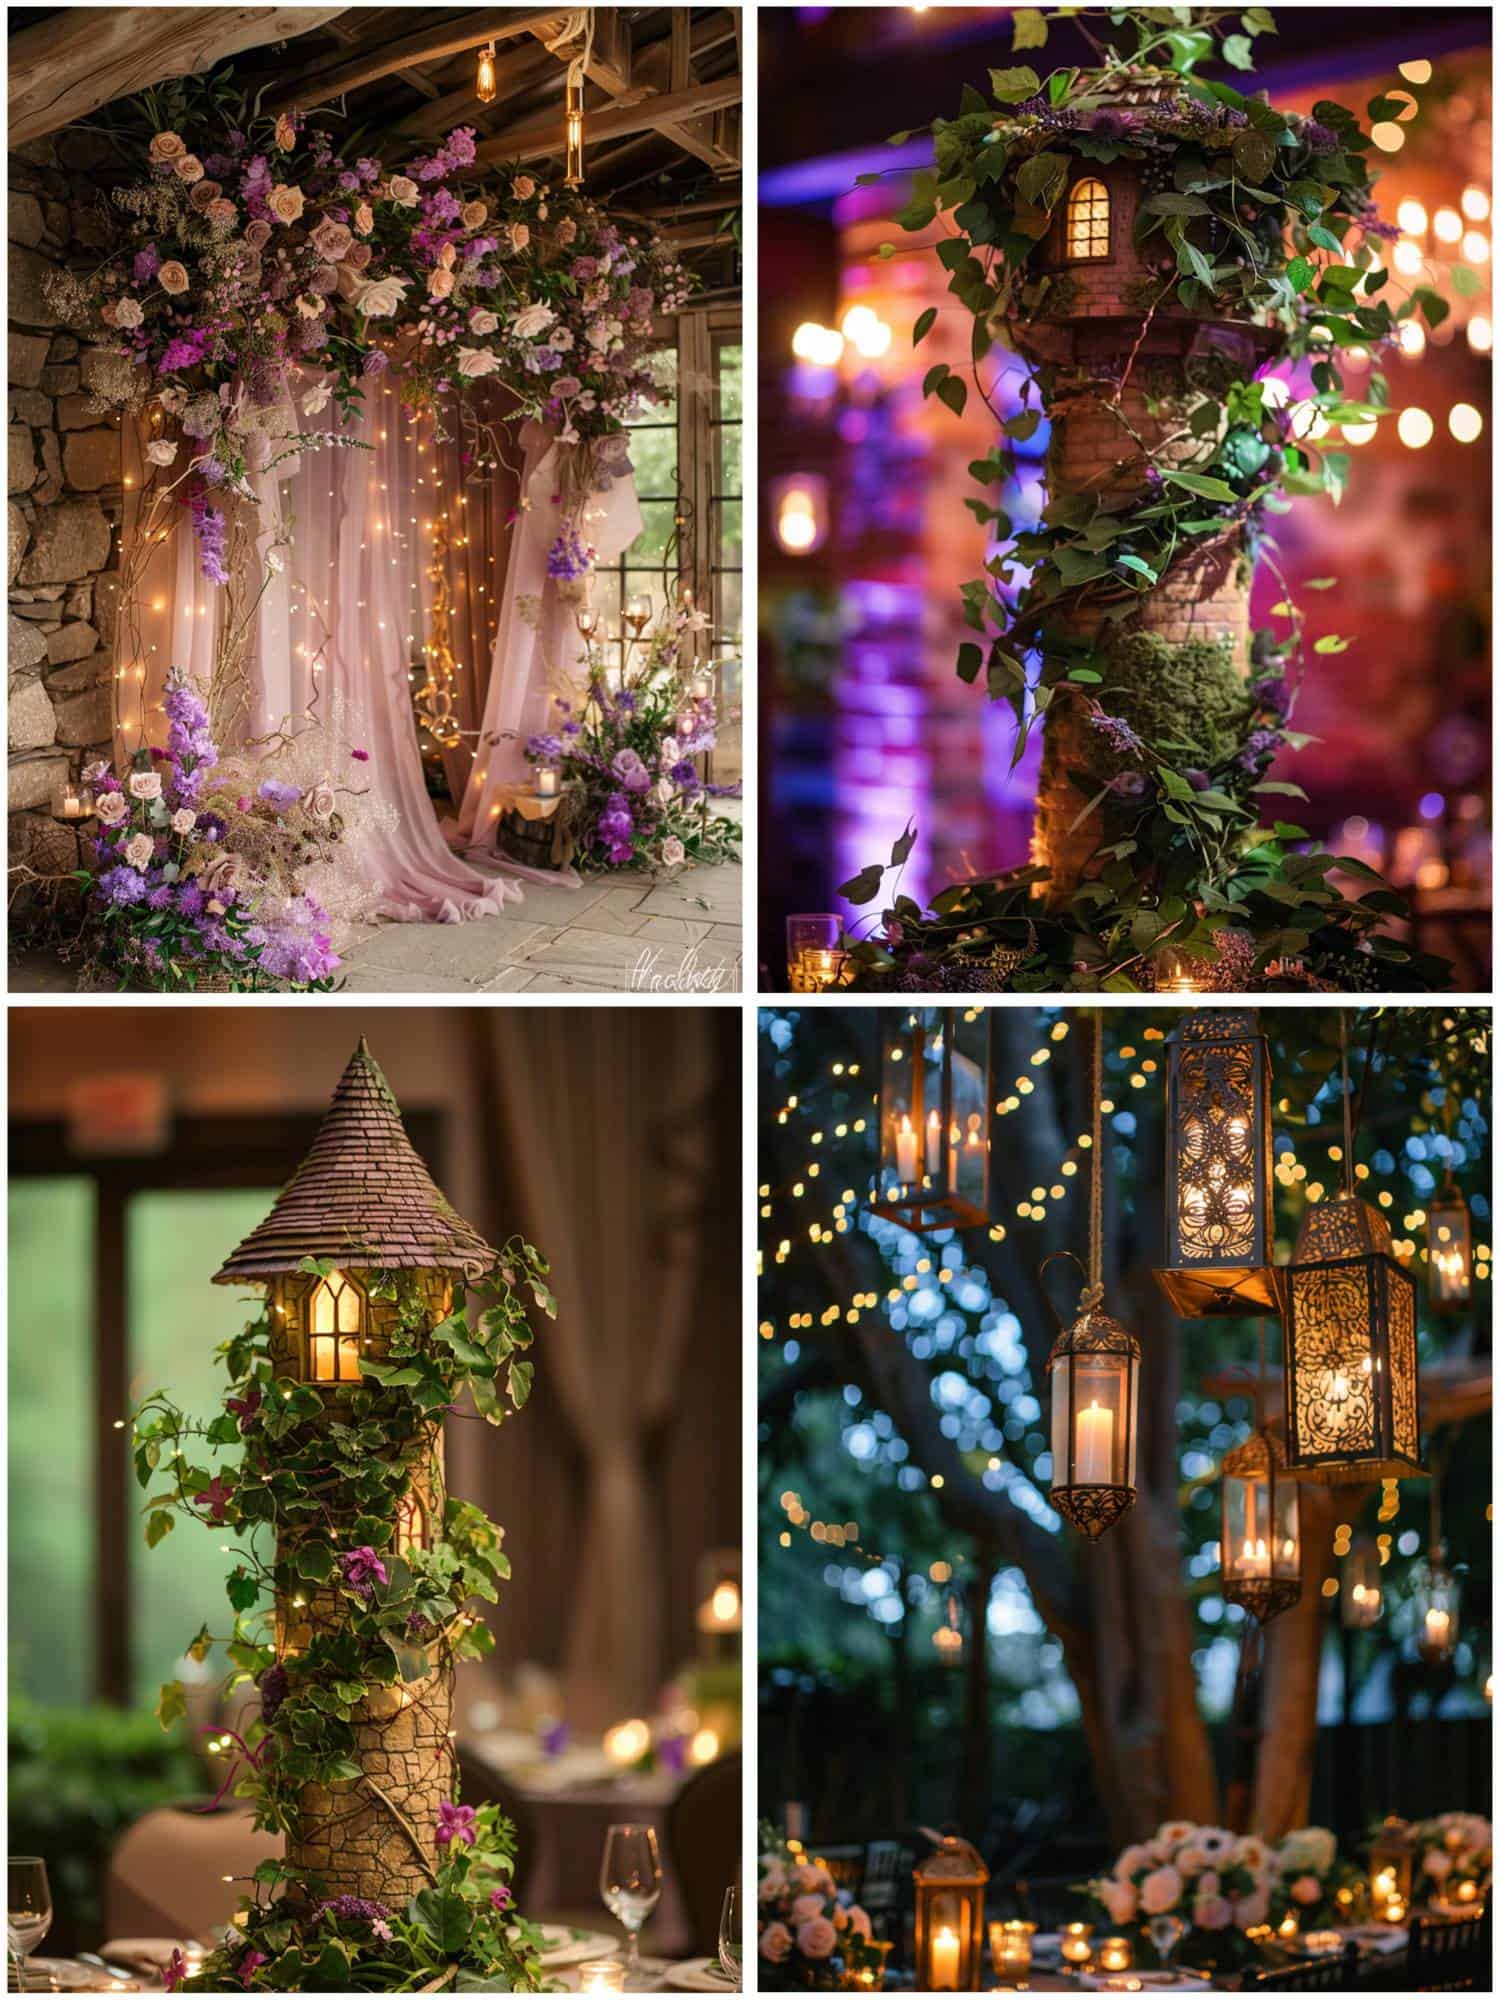 rapunzel wedding theme ideas for decor and centerpieces